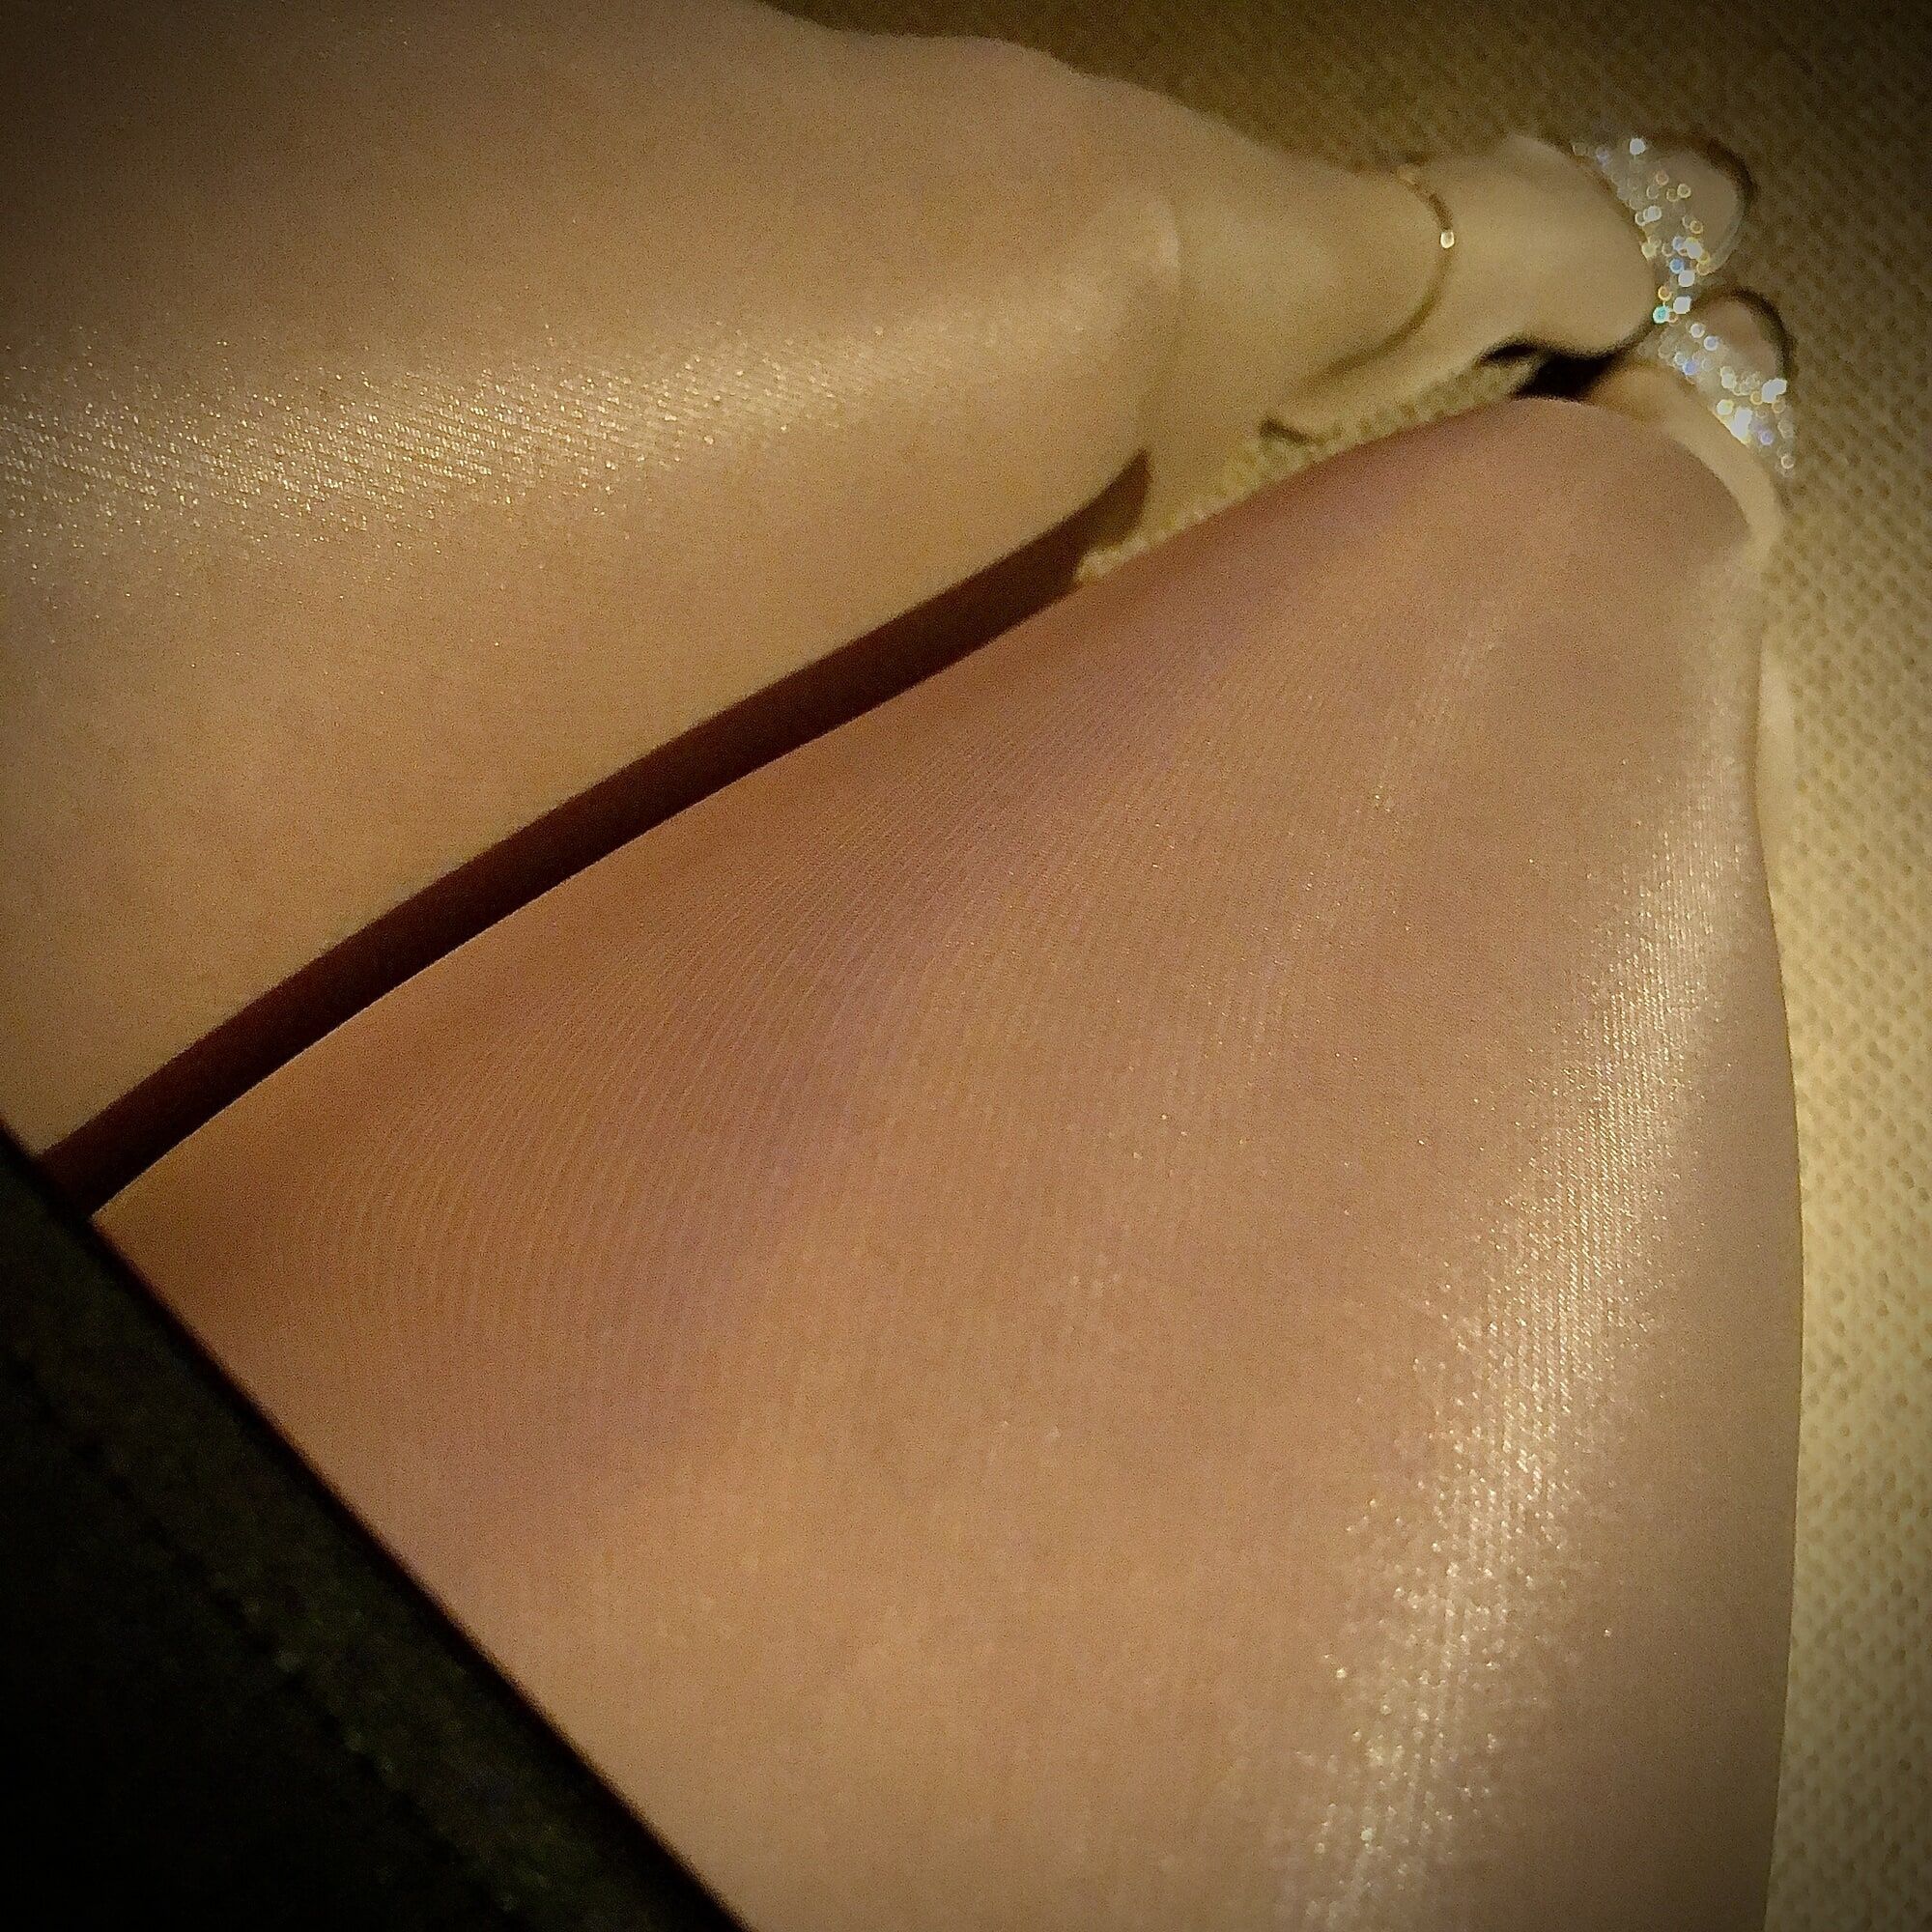 My legs on shiny pantyhose! #21